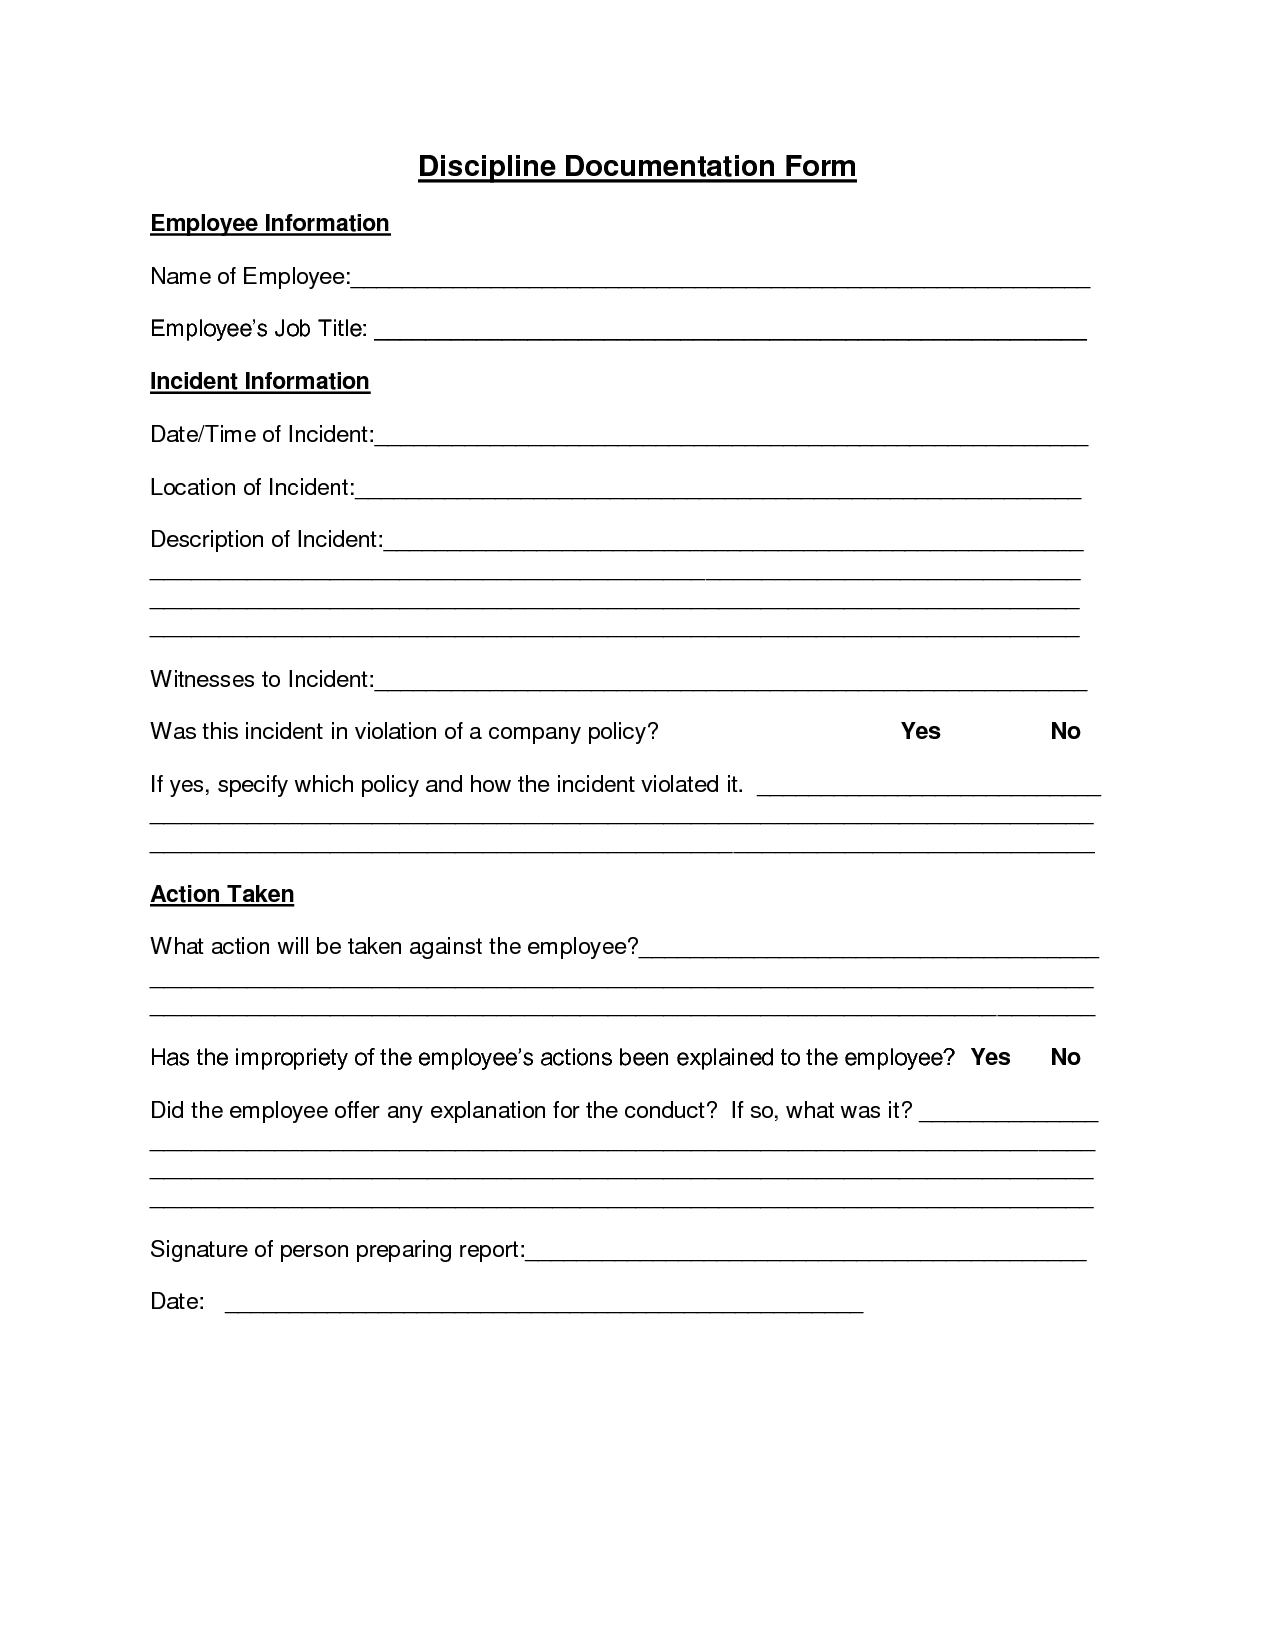 Employee Discipline Form | Employee Forms - Free Employee Self Evaluation Forms Printable